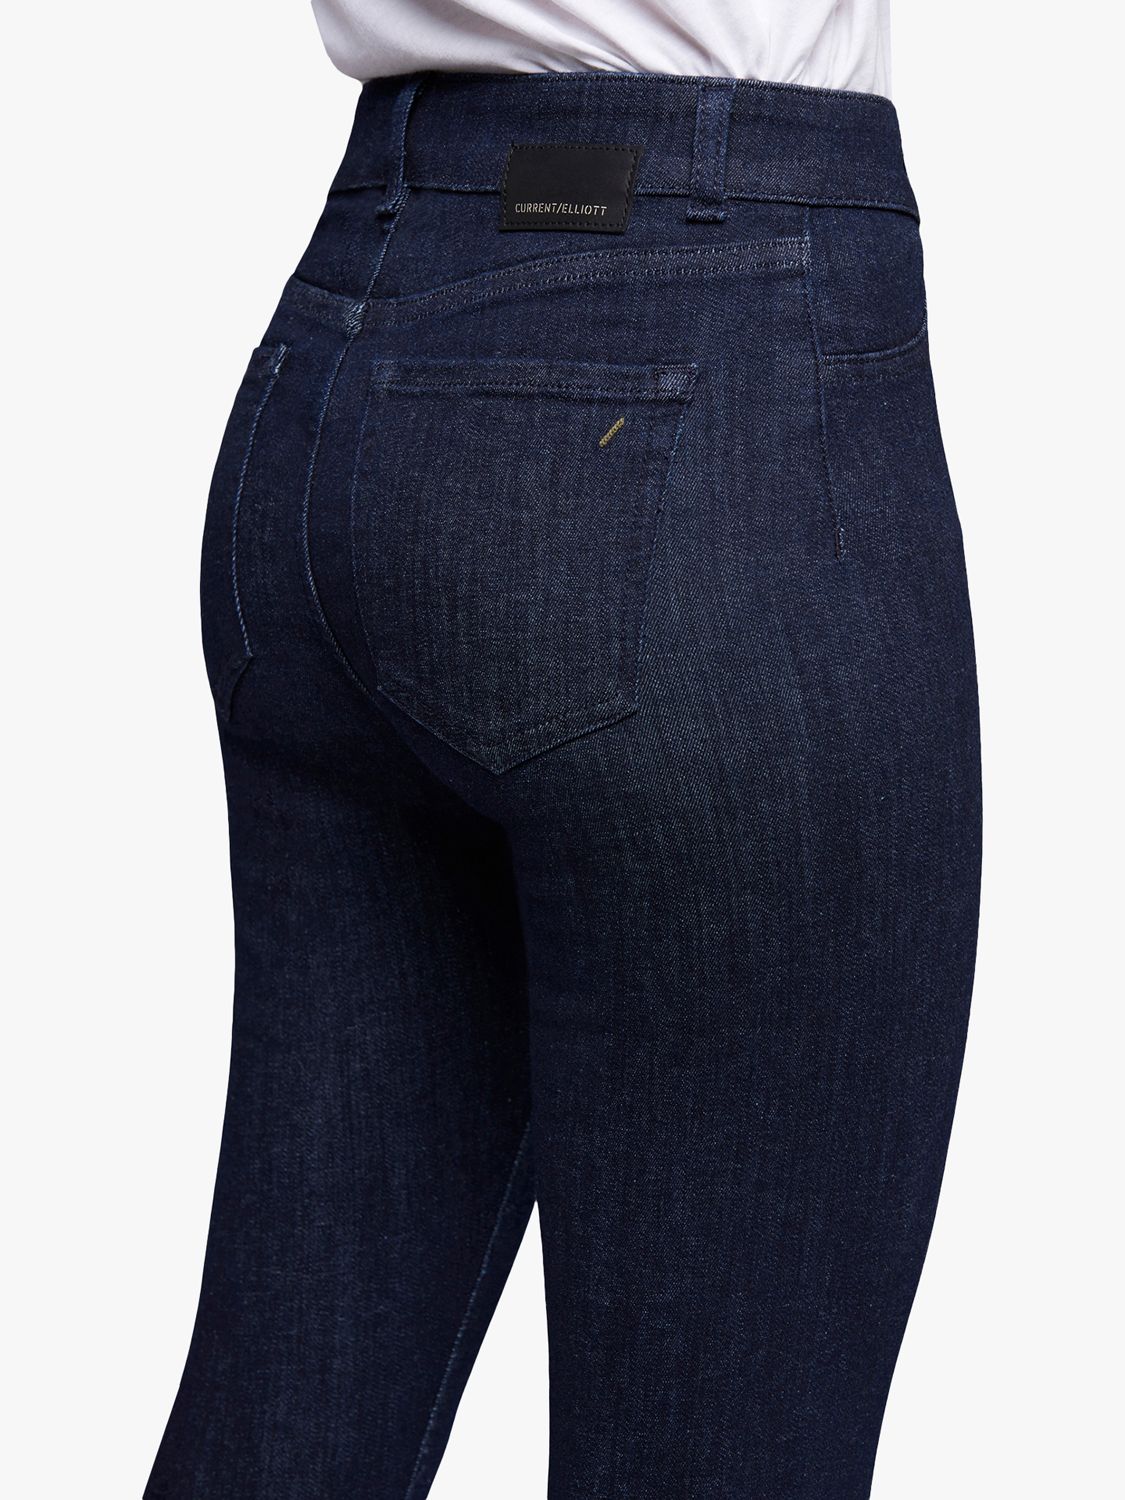 Buy Current/Elliott The Borderline Mid Rise Skinny Jeans Online at johnlewis.com